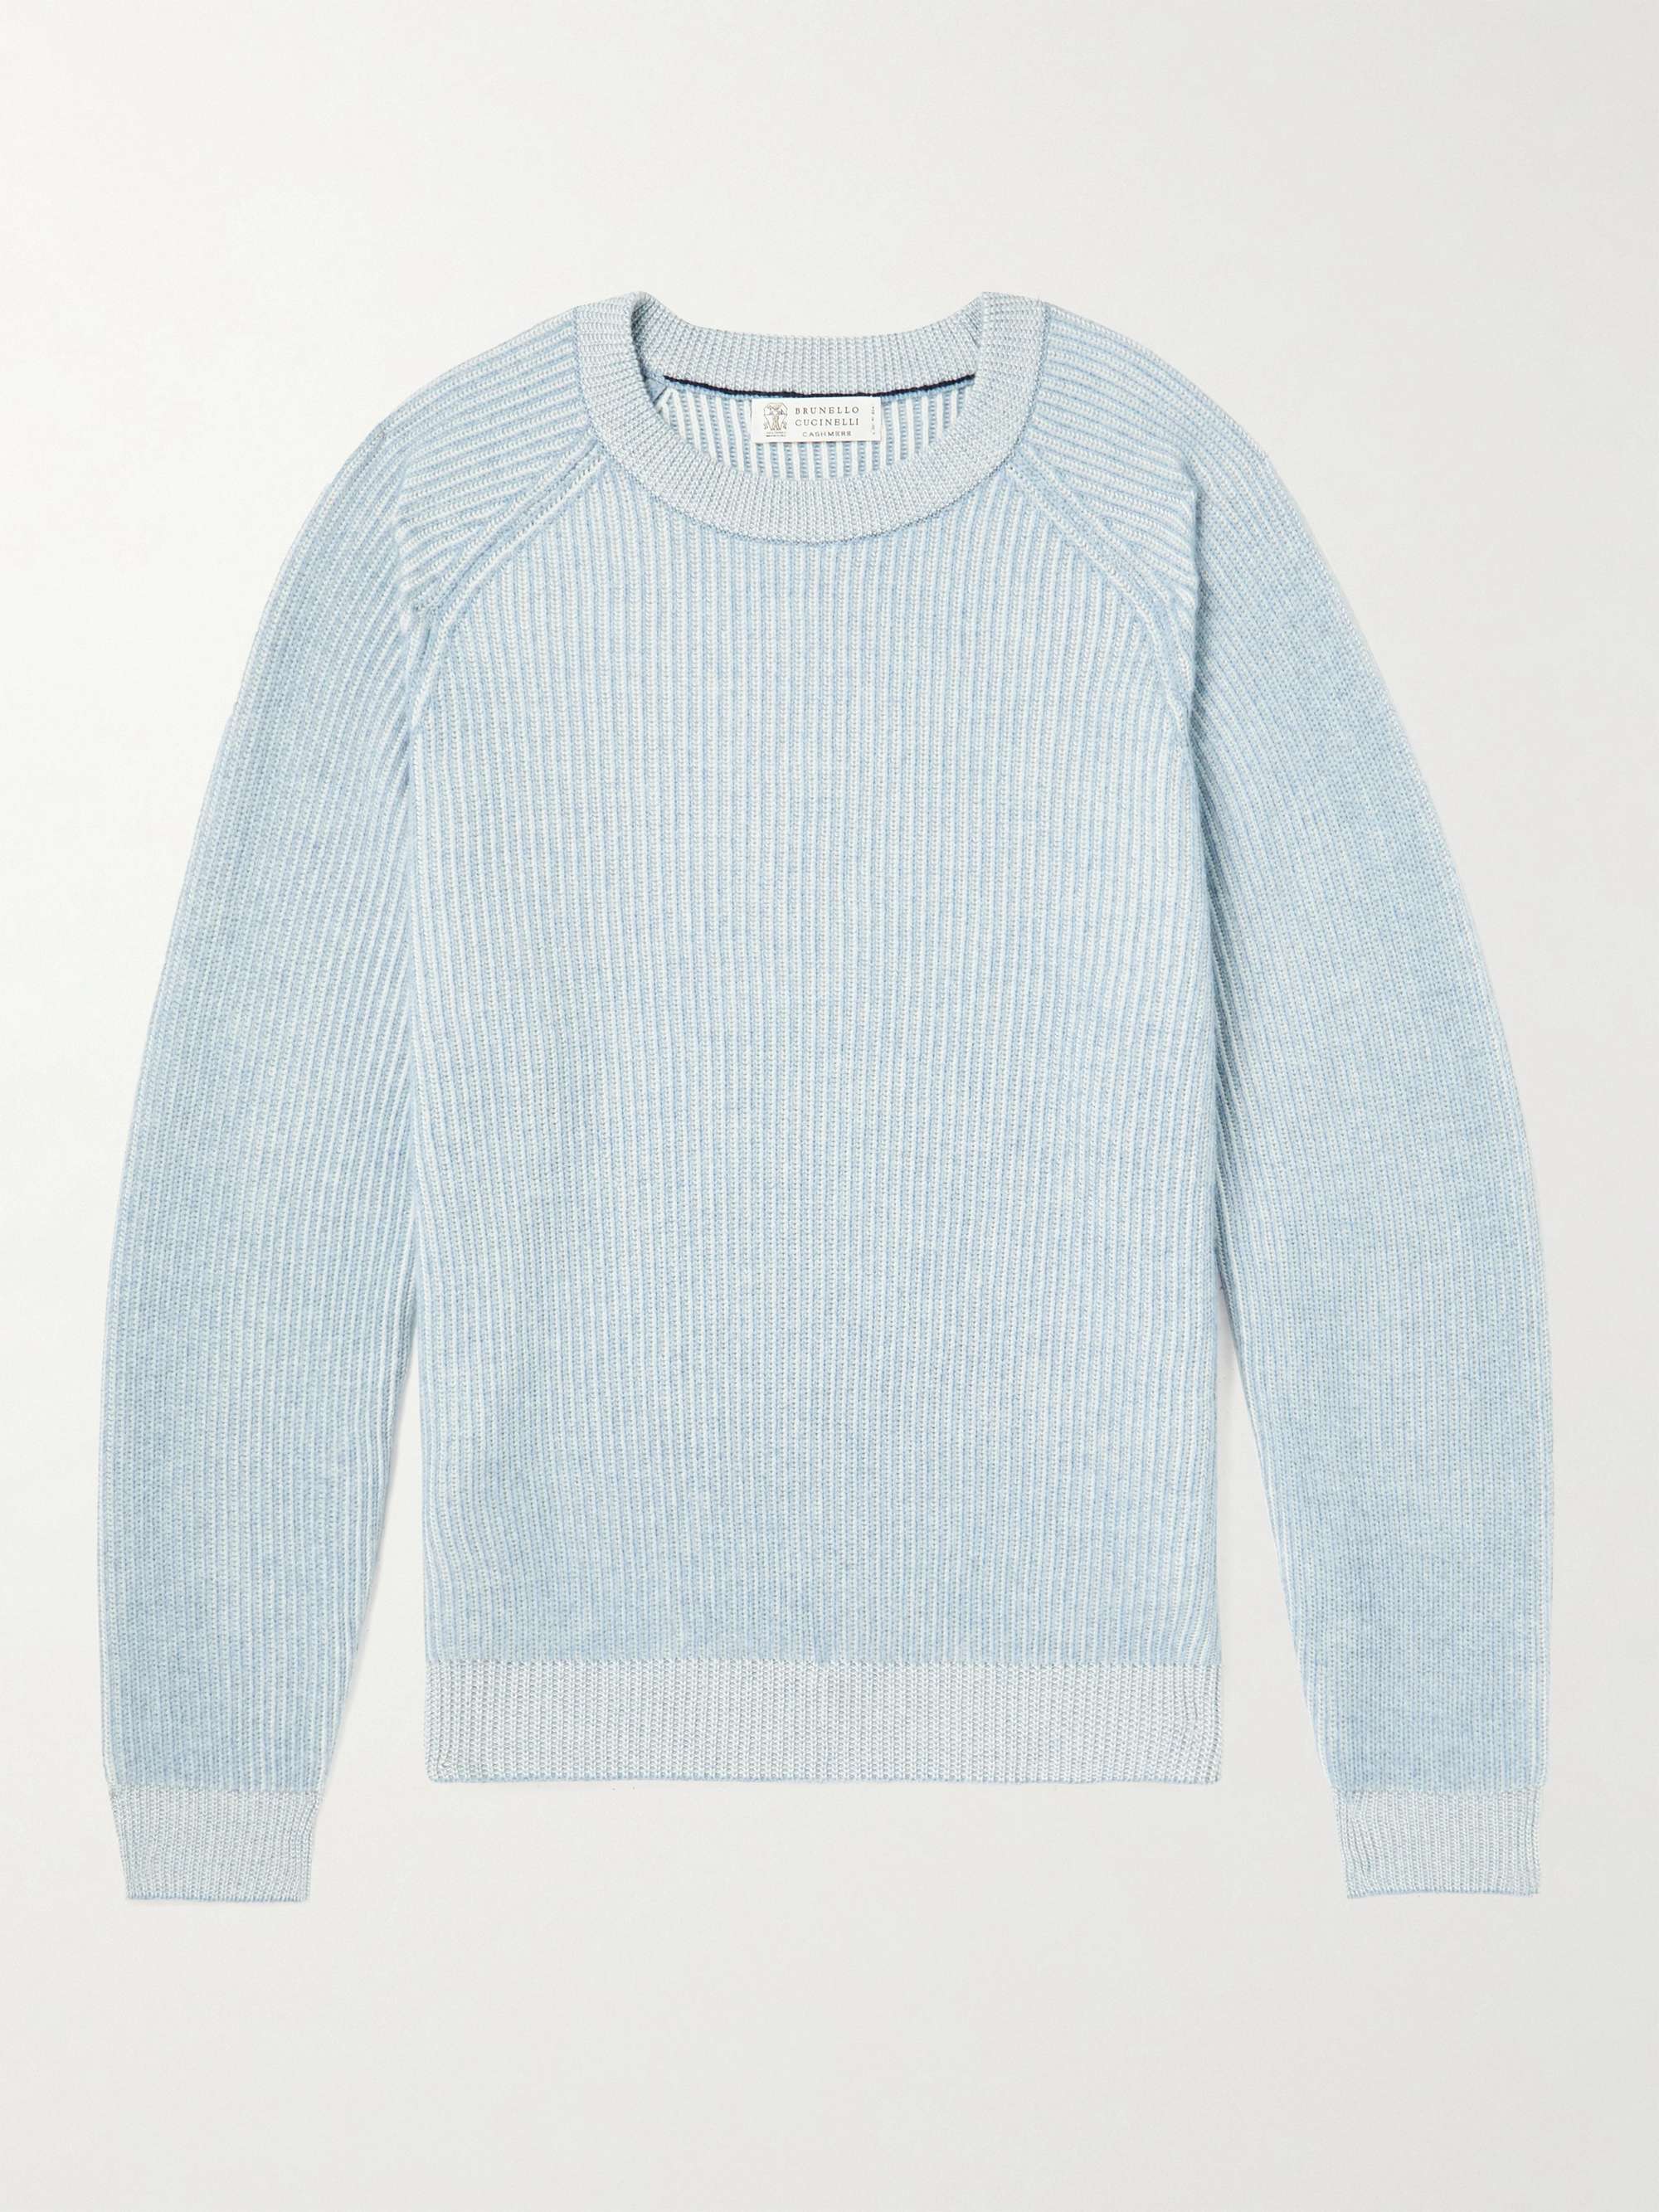 Light blue Striped Ribbed Cashmere Sweater | BRUNELLO CUCINELLI | MR PORTER